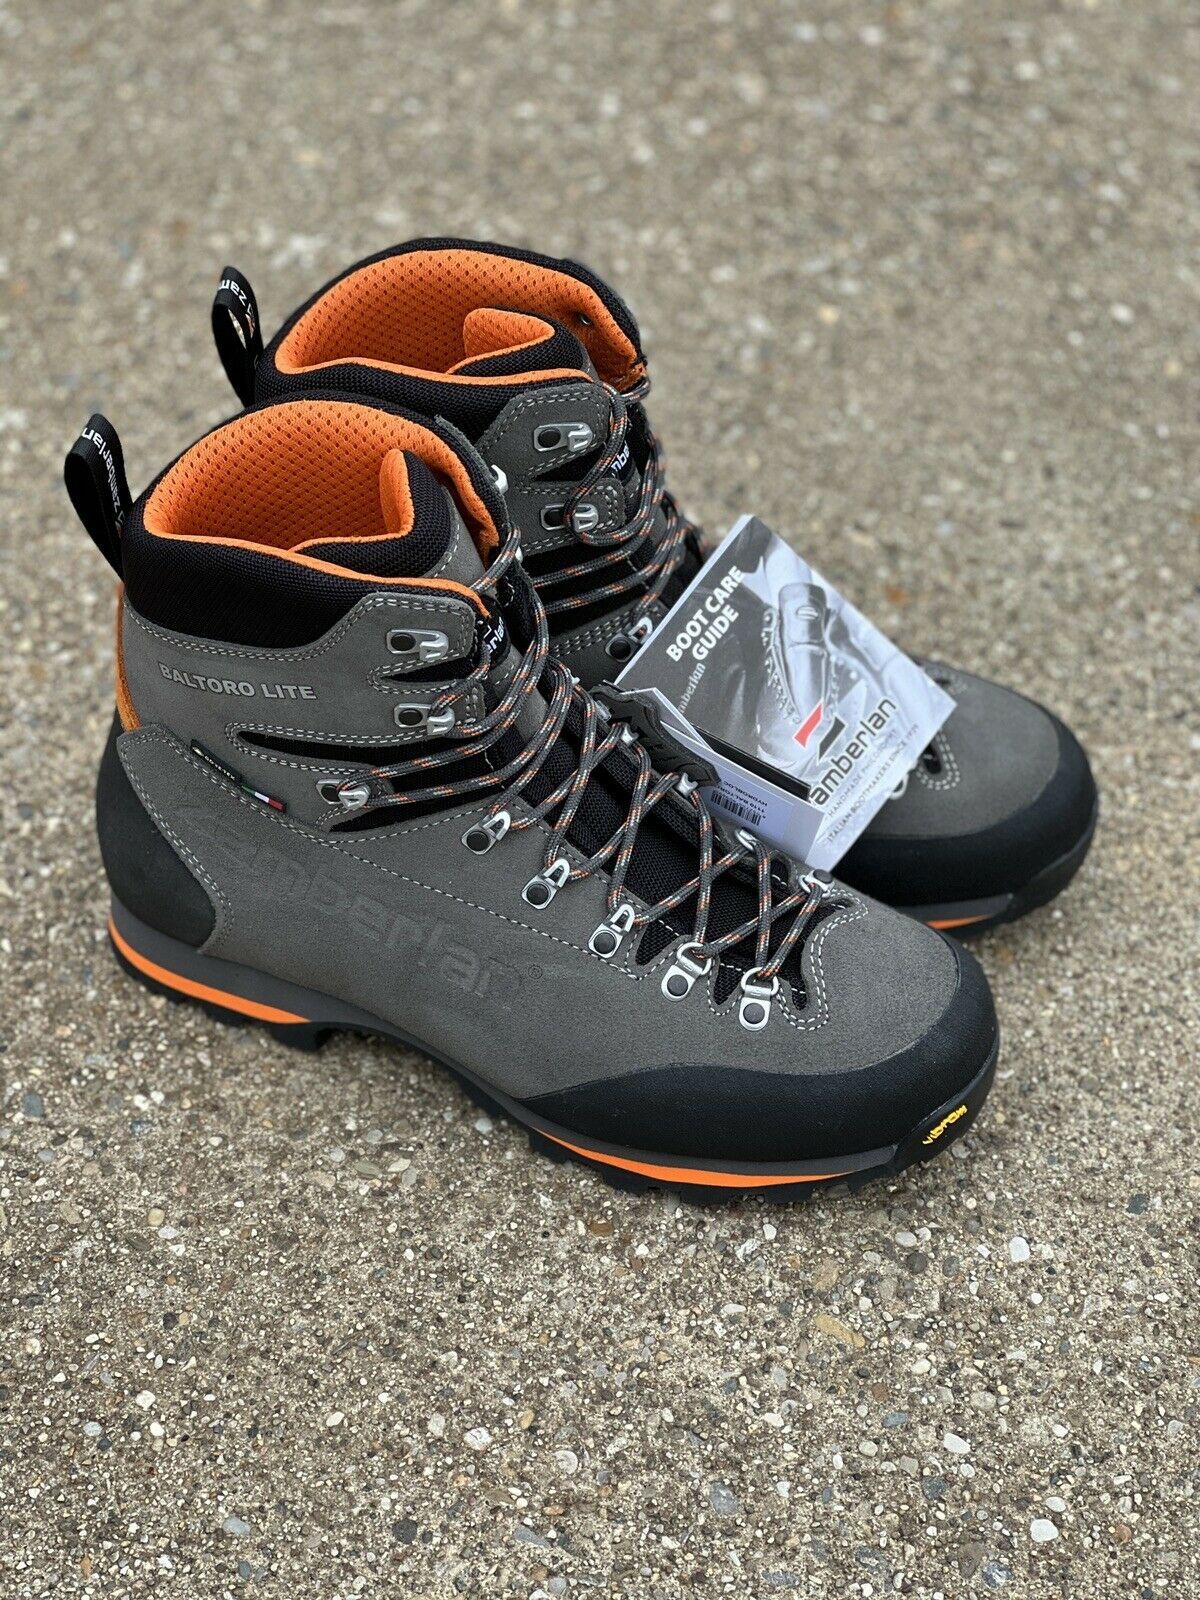 Zamberlan 1110 Baltoro Lite GTX Men’s US 11 / EU 45.5 Graphite Black Hiking Boot